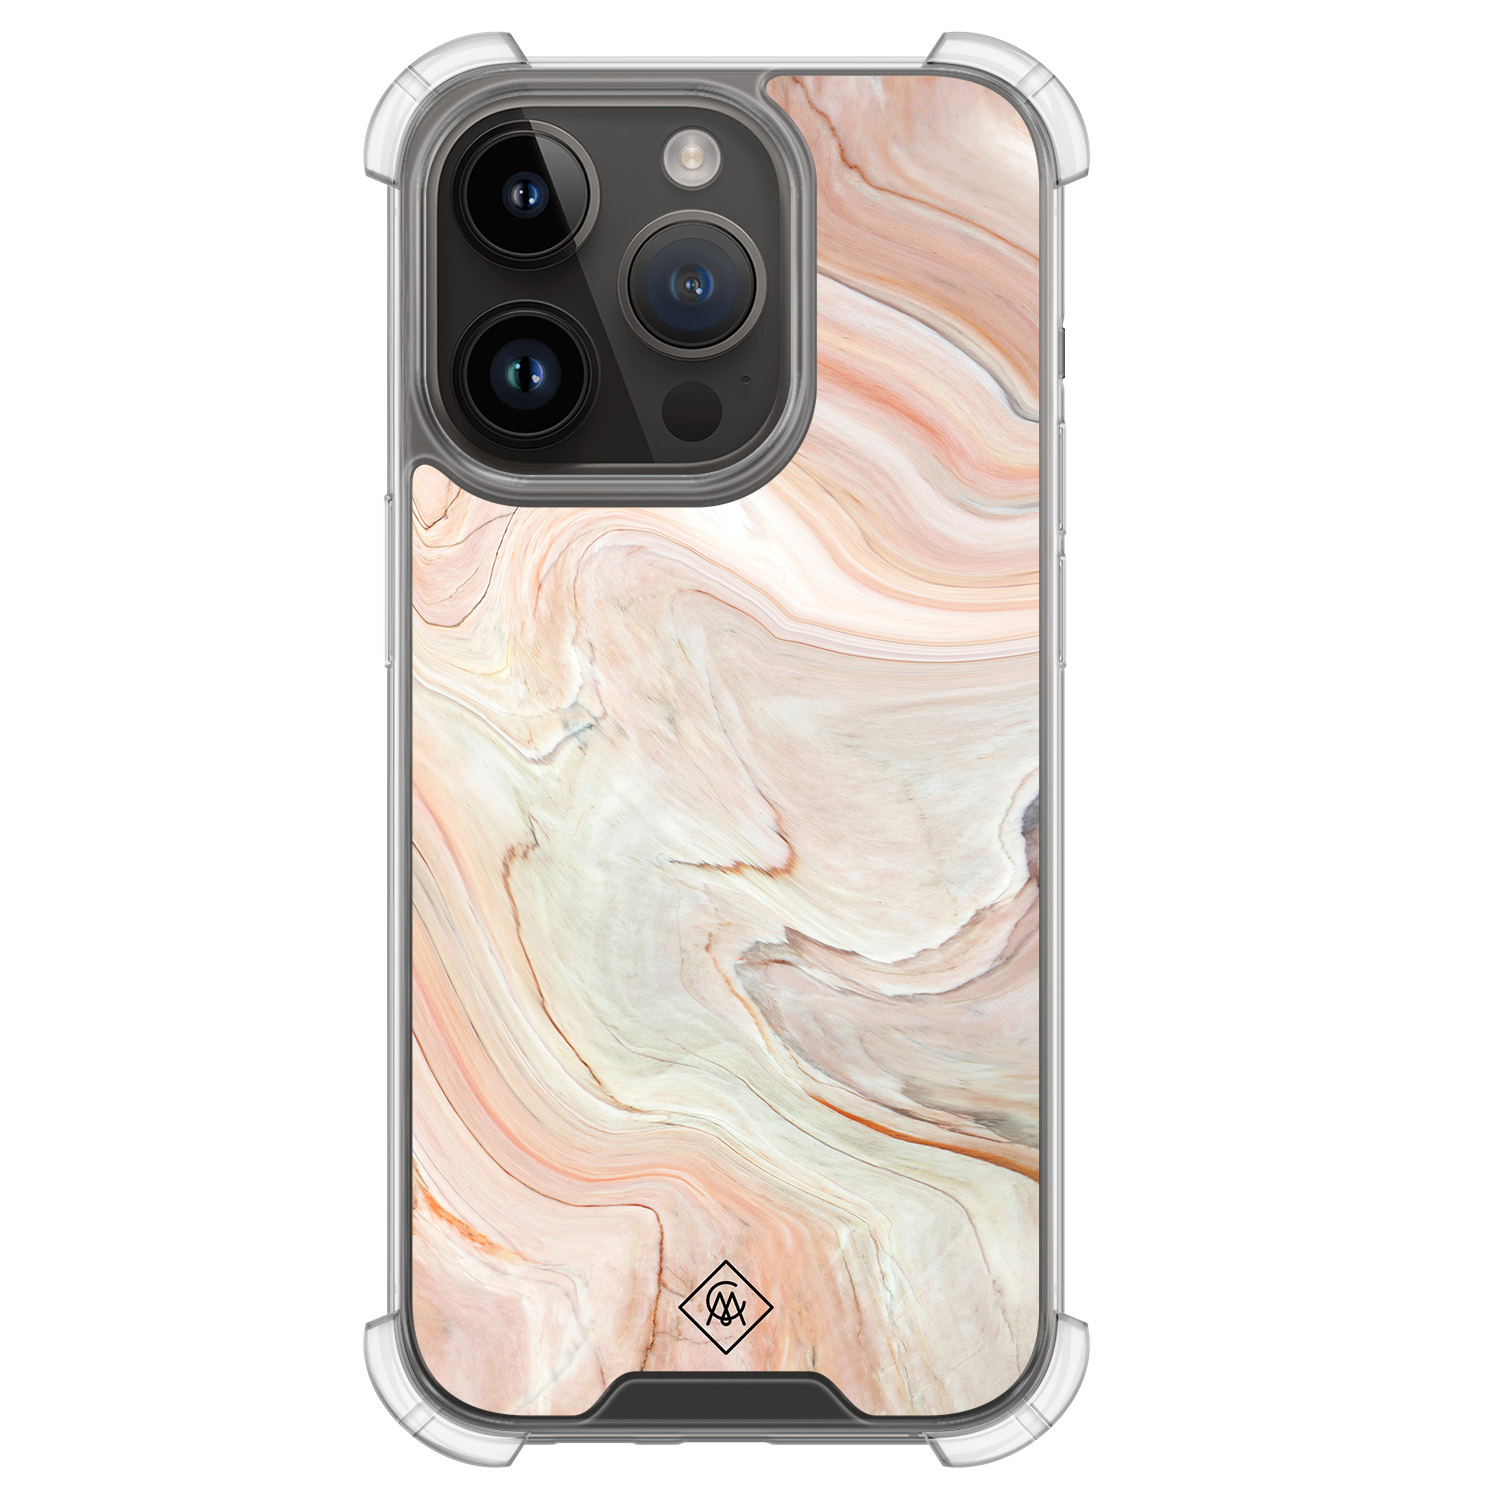 iPhone 13 Pro hoesje - Marmer waves - Casimoda® Shockproof case - Extra sterk - TPU/polycarbonaat - Bruin/beige, Transparant